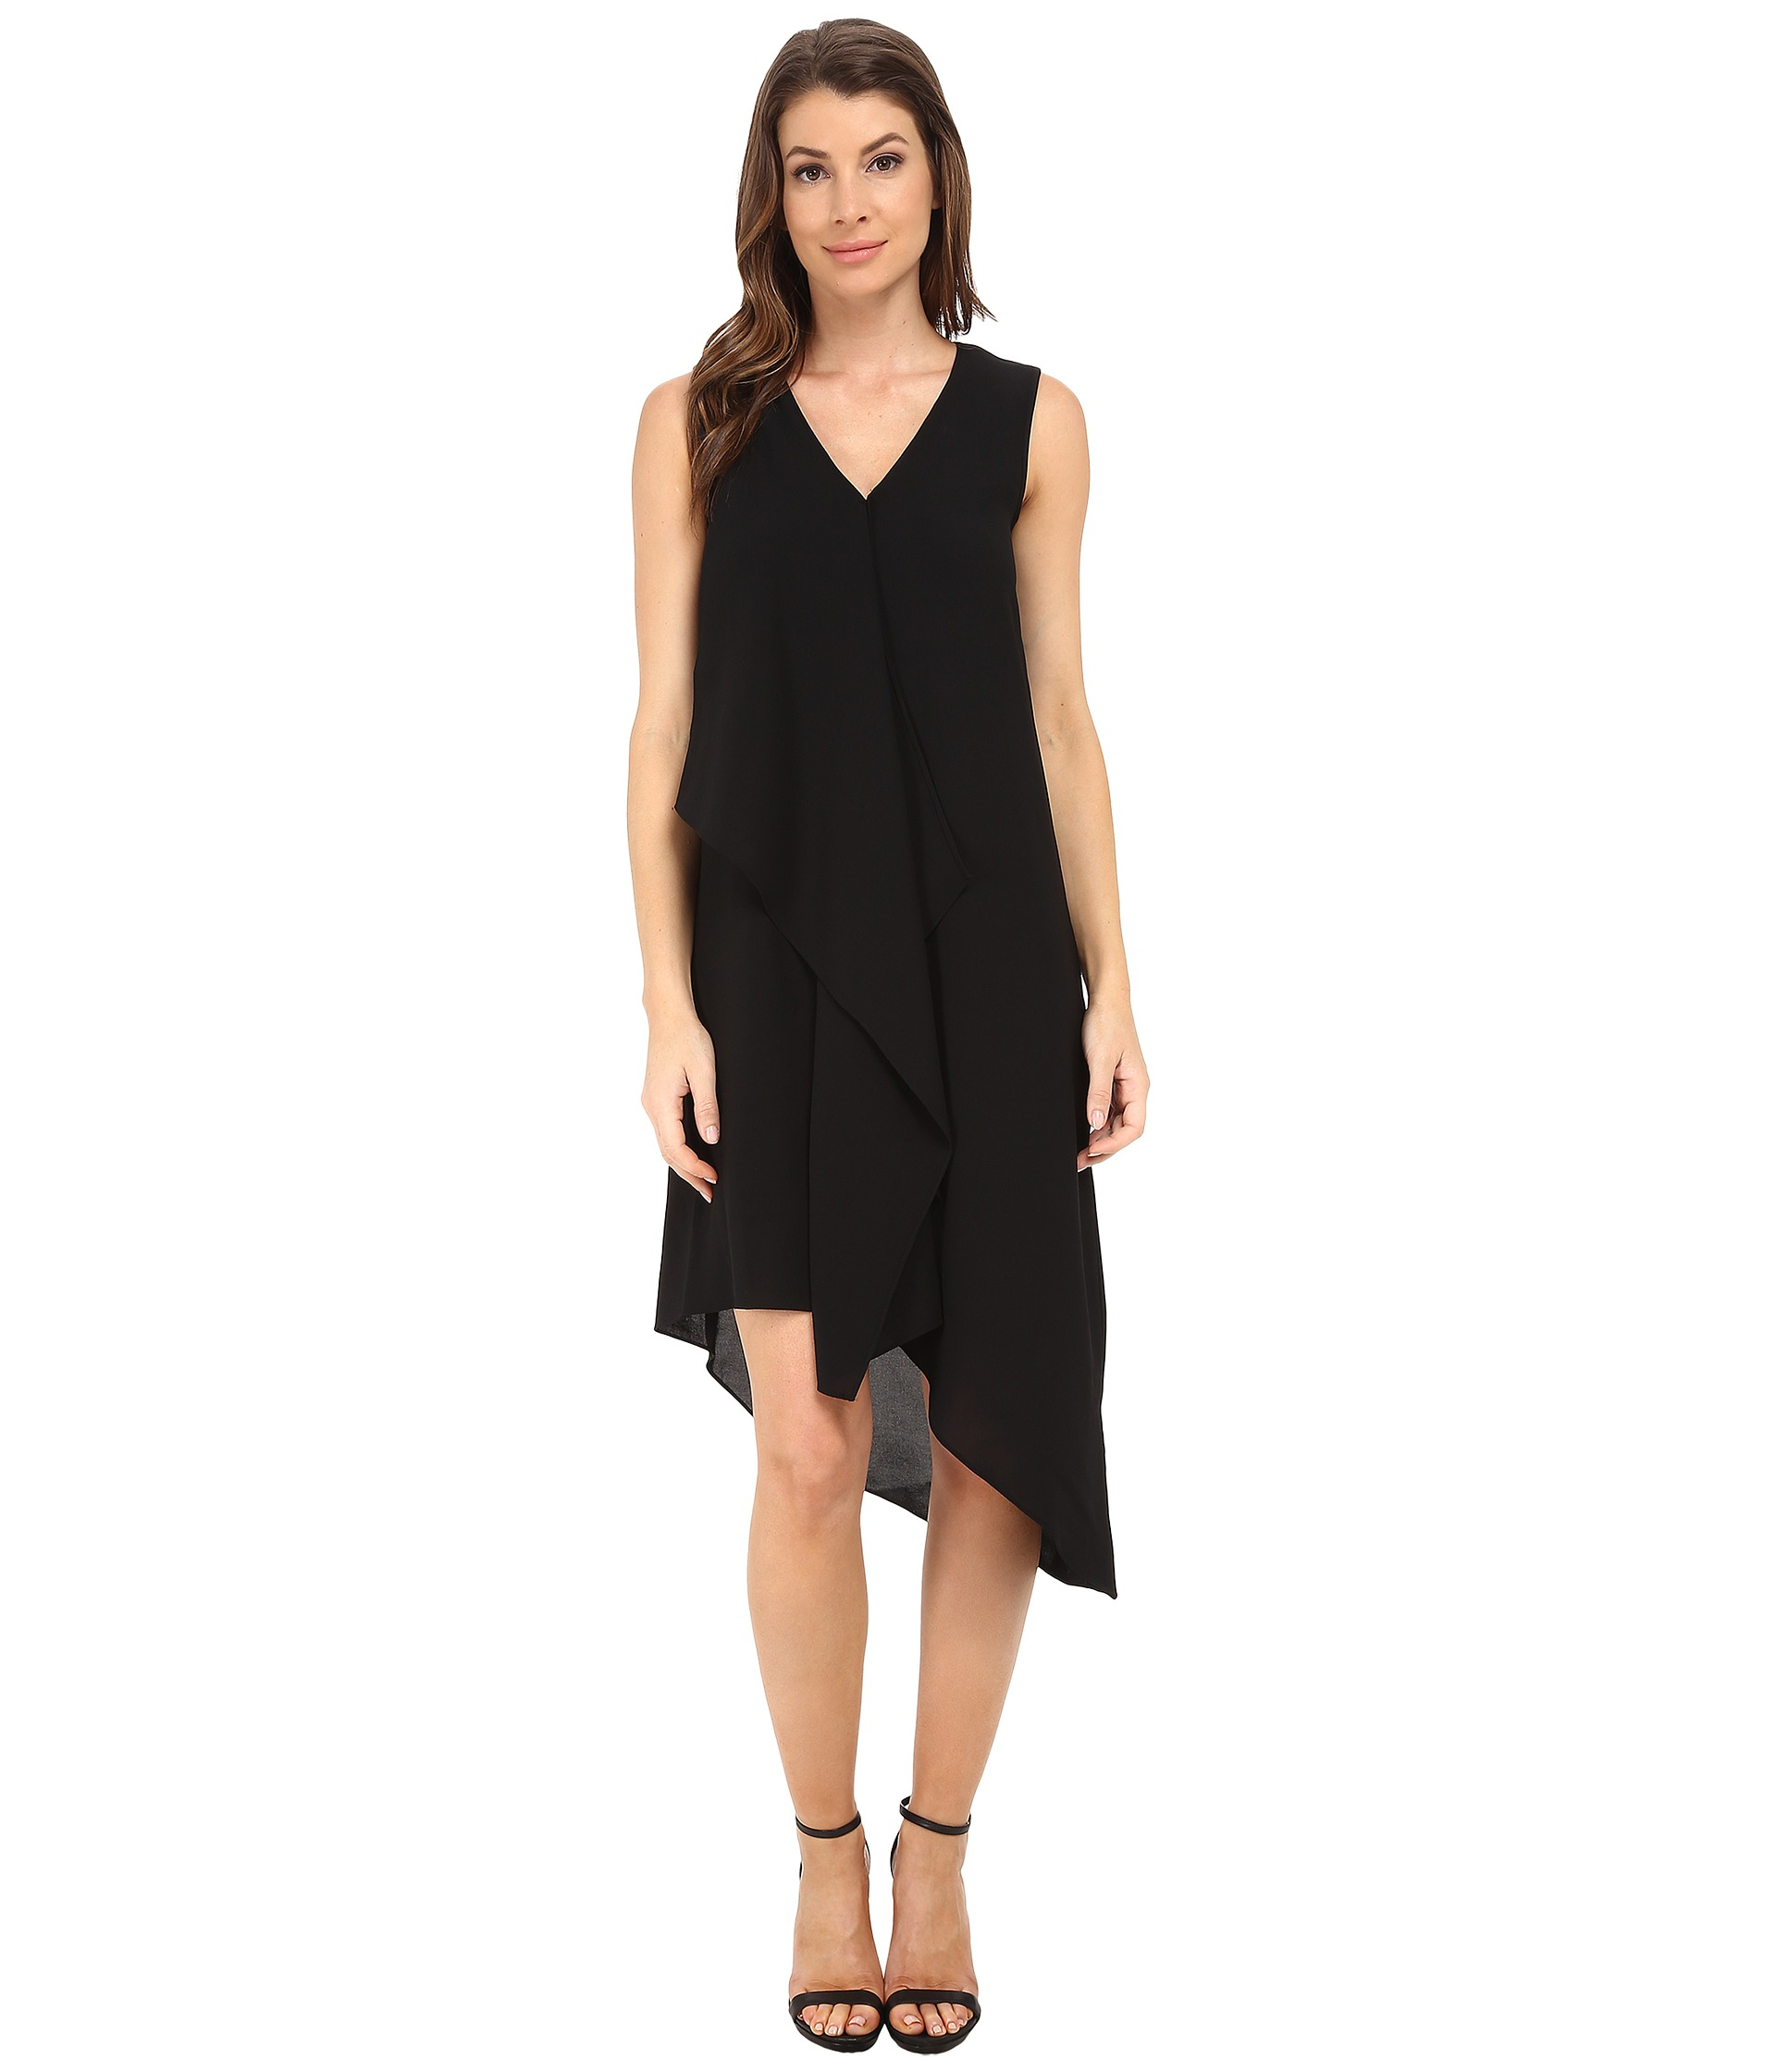 Adrianna Papell Chiffon Asymmetrical Front Drape Dress in Black - Lyst